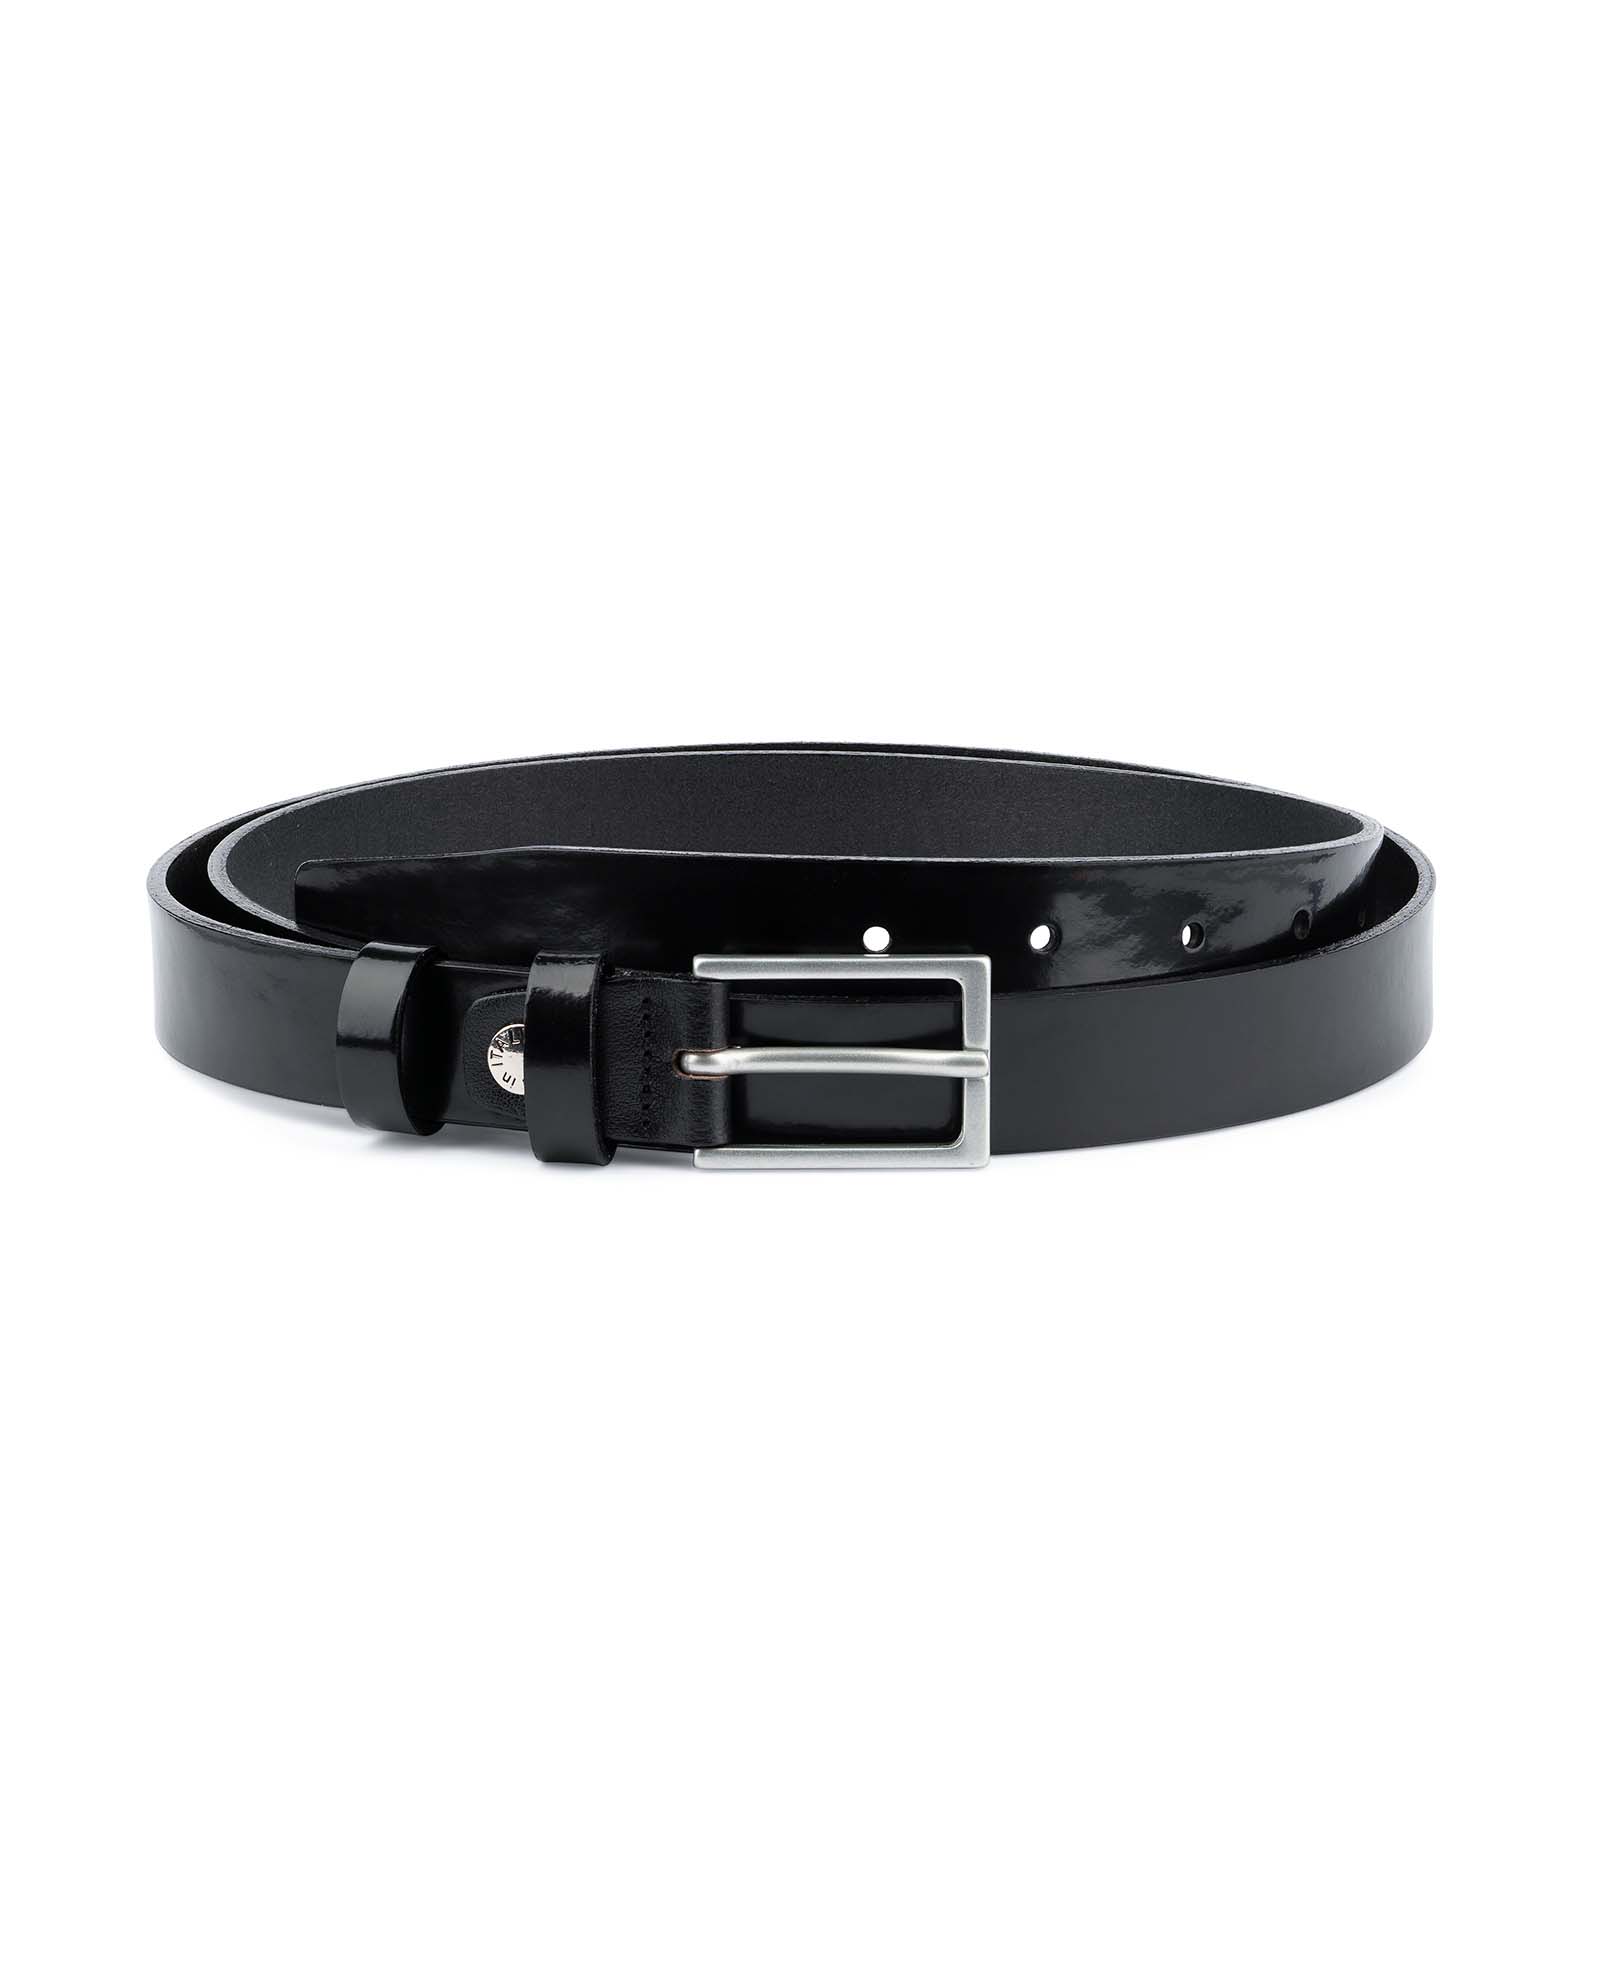 1 inch Black Patent leather belt Womens Mens belts Dress Genuine Thin Narrow | eBay